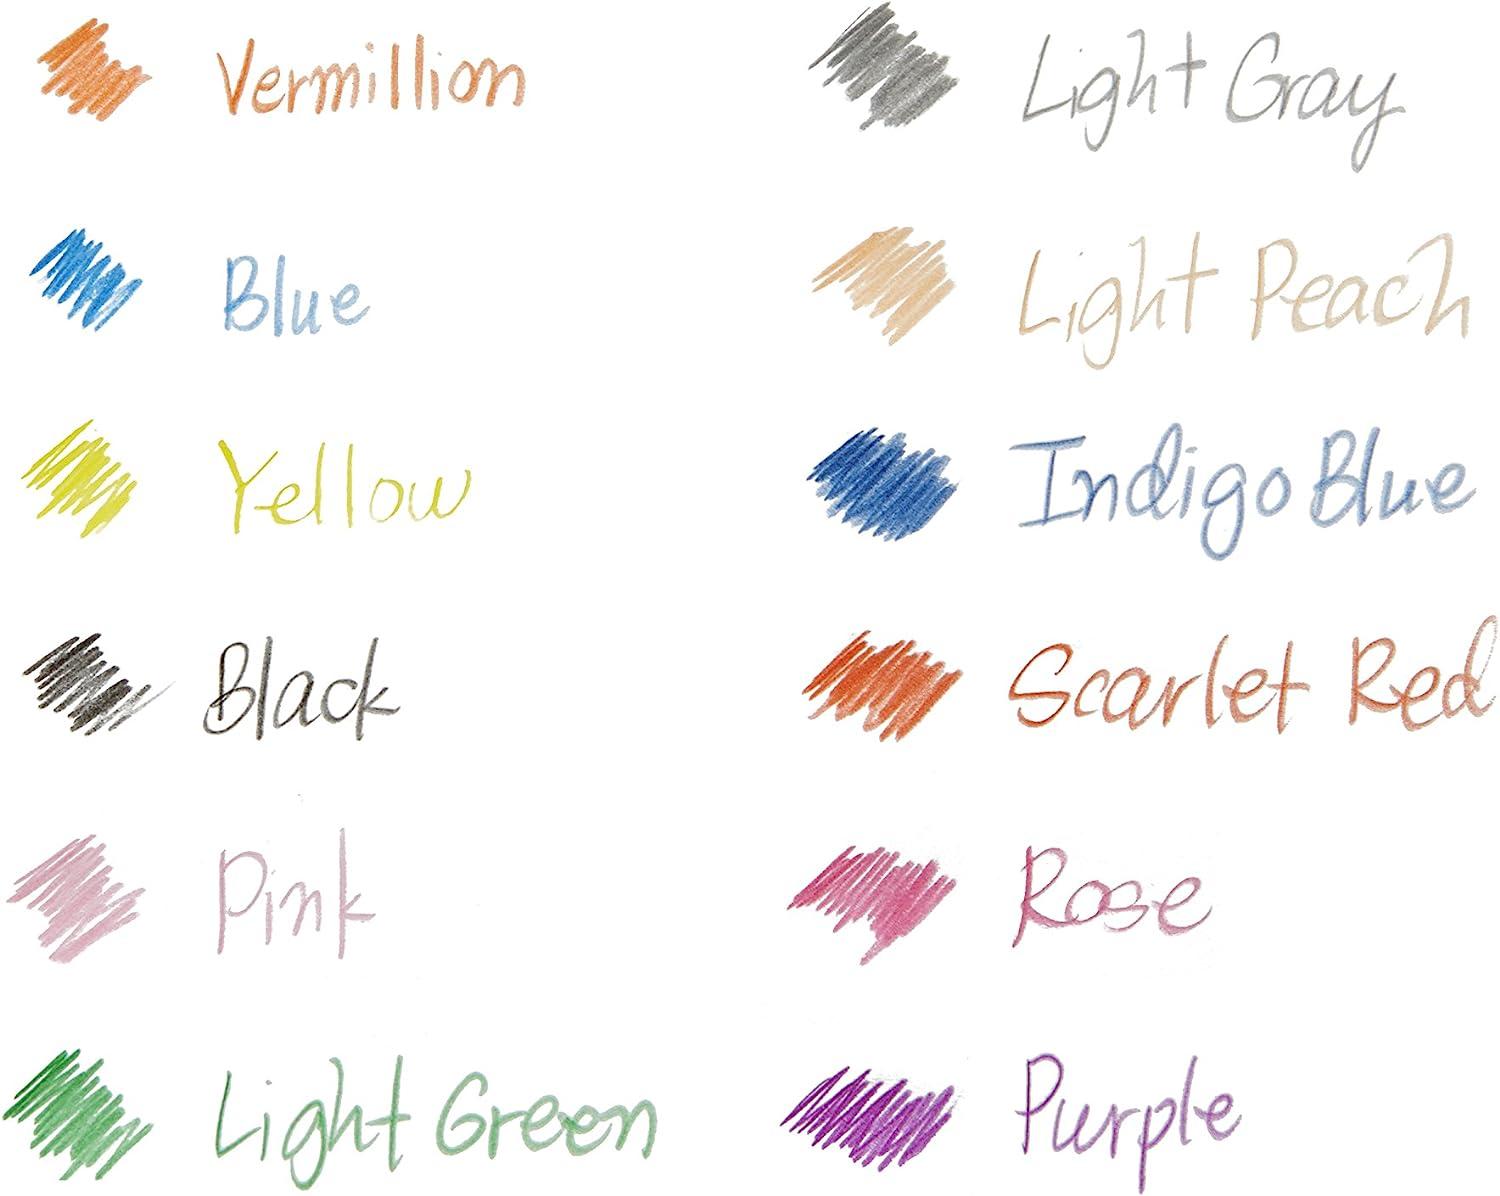 Prismacolor 20517 Col-Erase Colored Woodcase Pencils w/ Eraser, 24 Assorted  Colors/Set 